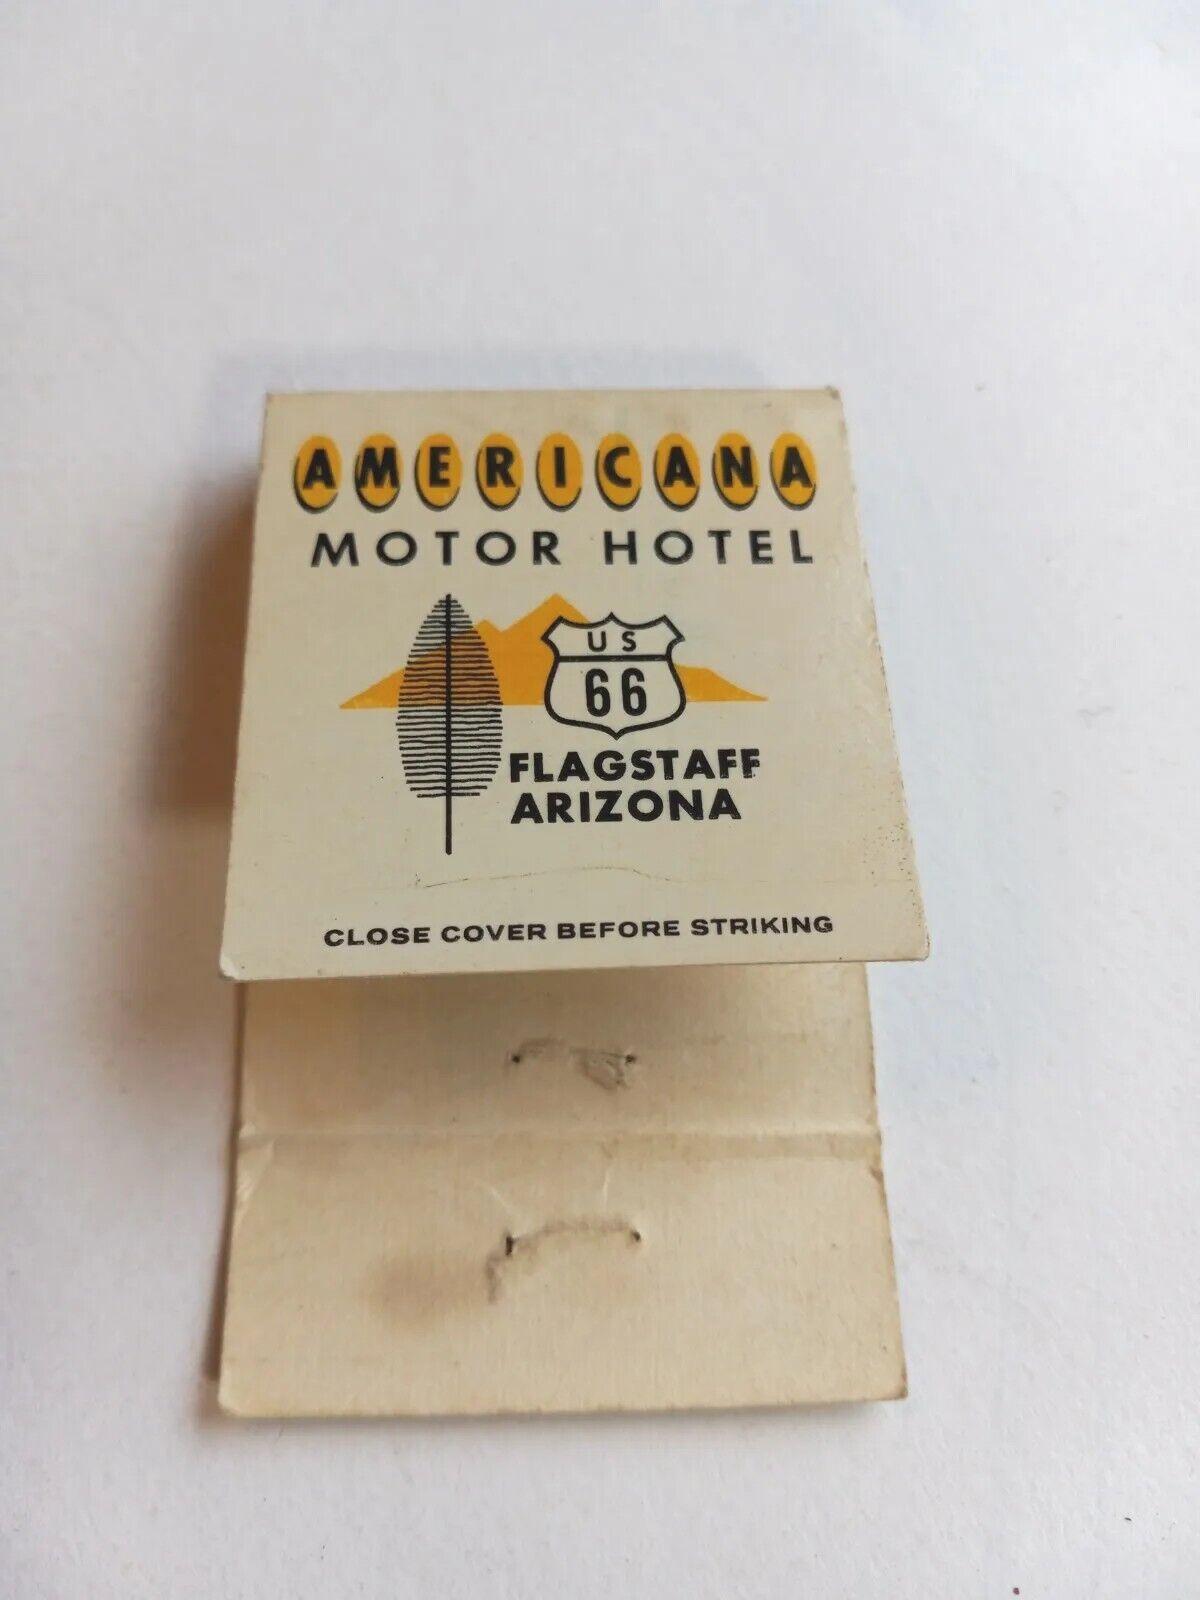  Flagstaff, Arizona  U.S. 66  Americana Motor Hotel Matchbook